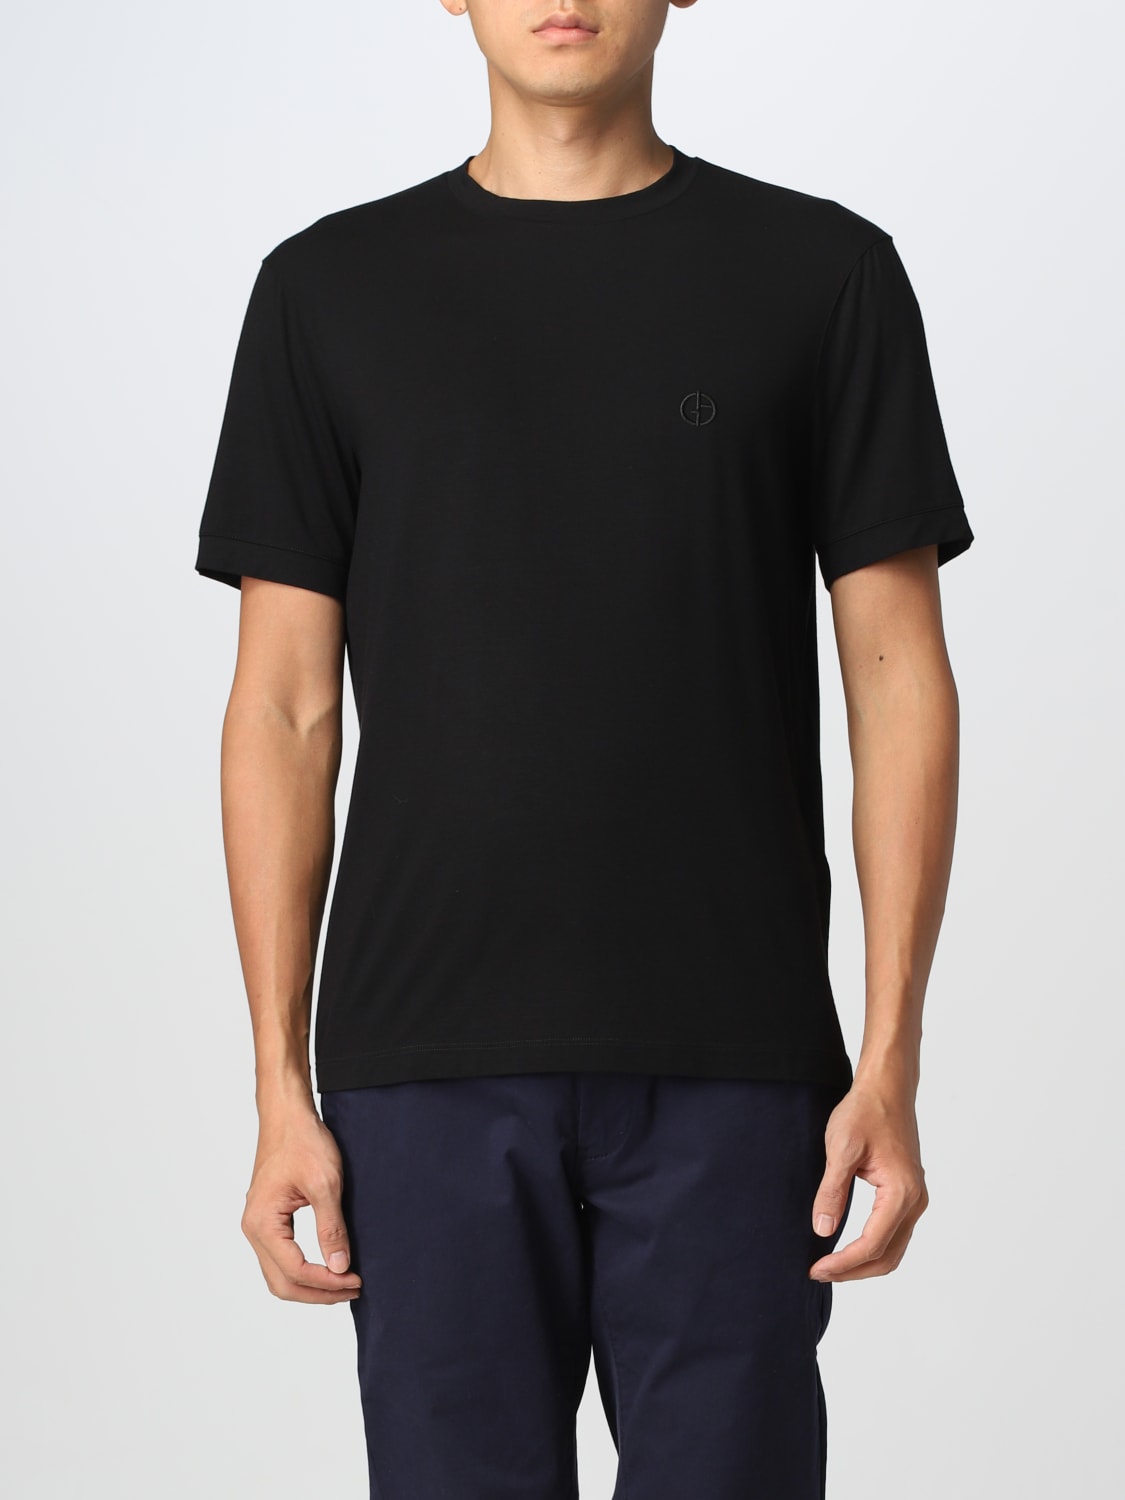 GIORGIO ARMANI: t-shirt for man - Black  Giorgio Armani t-shirt  3GST52SJP4Z online at